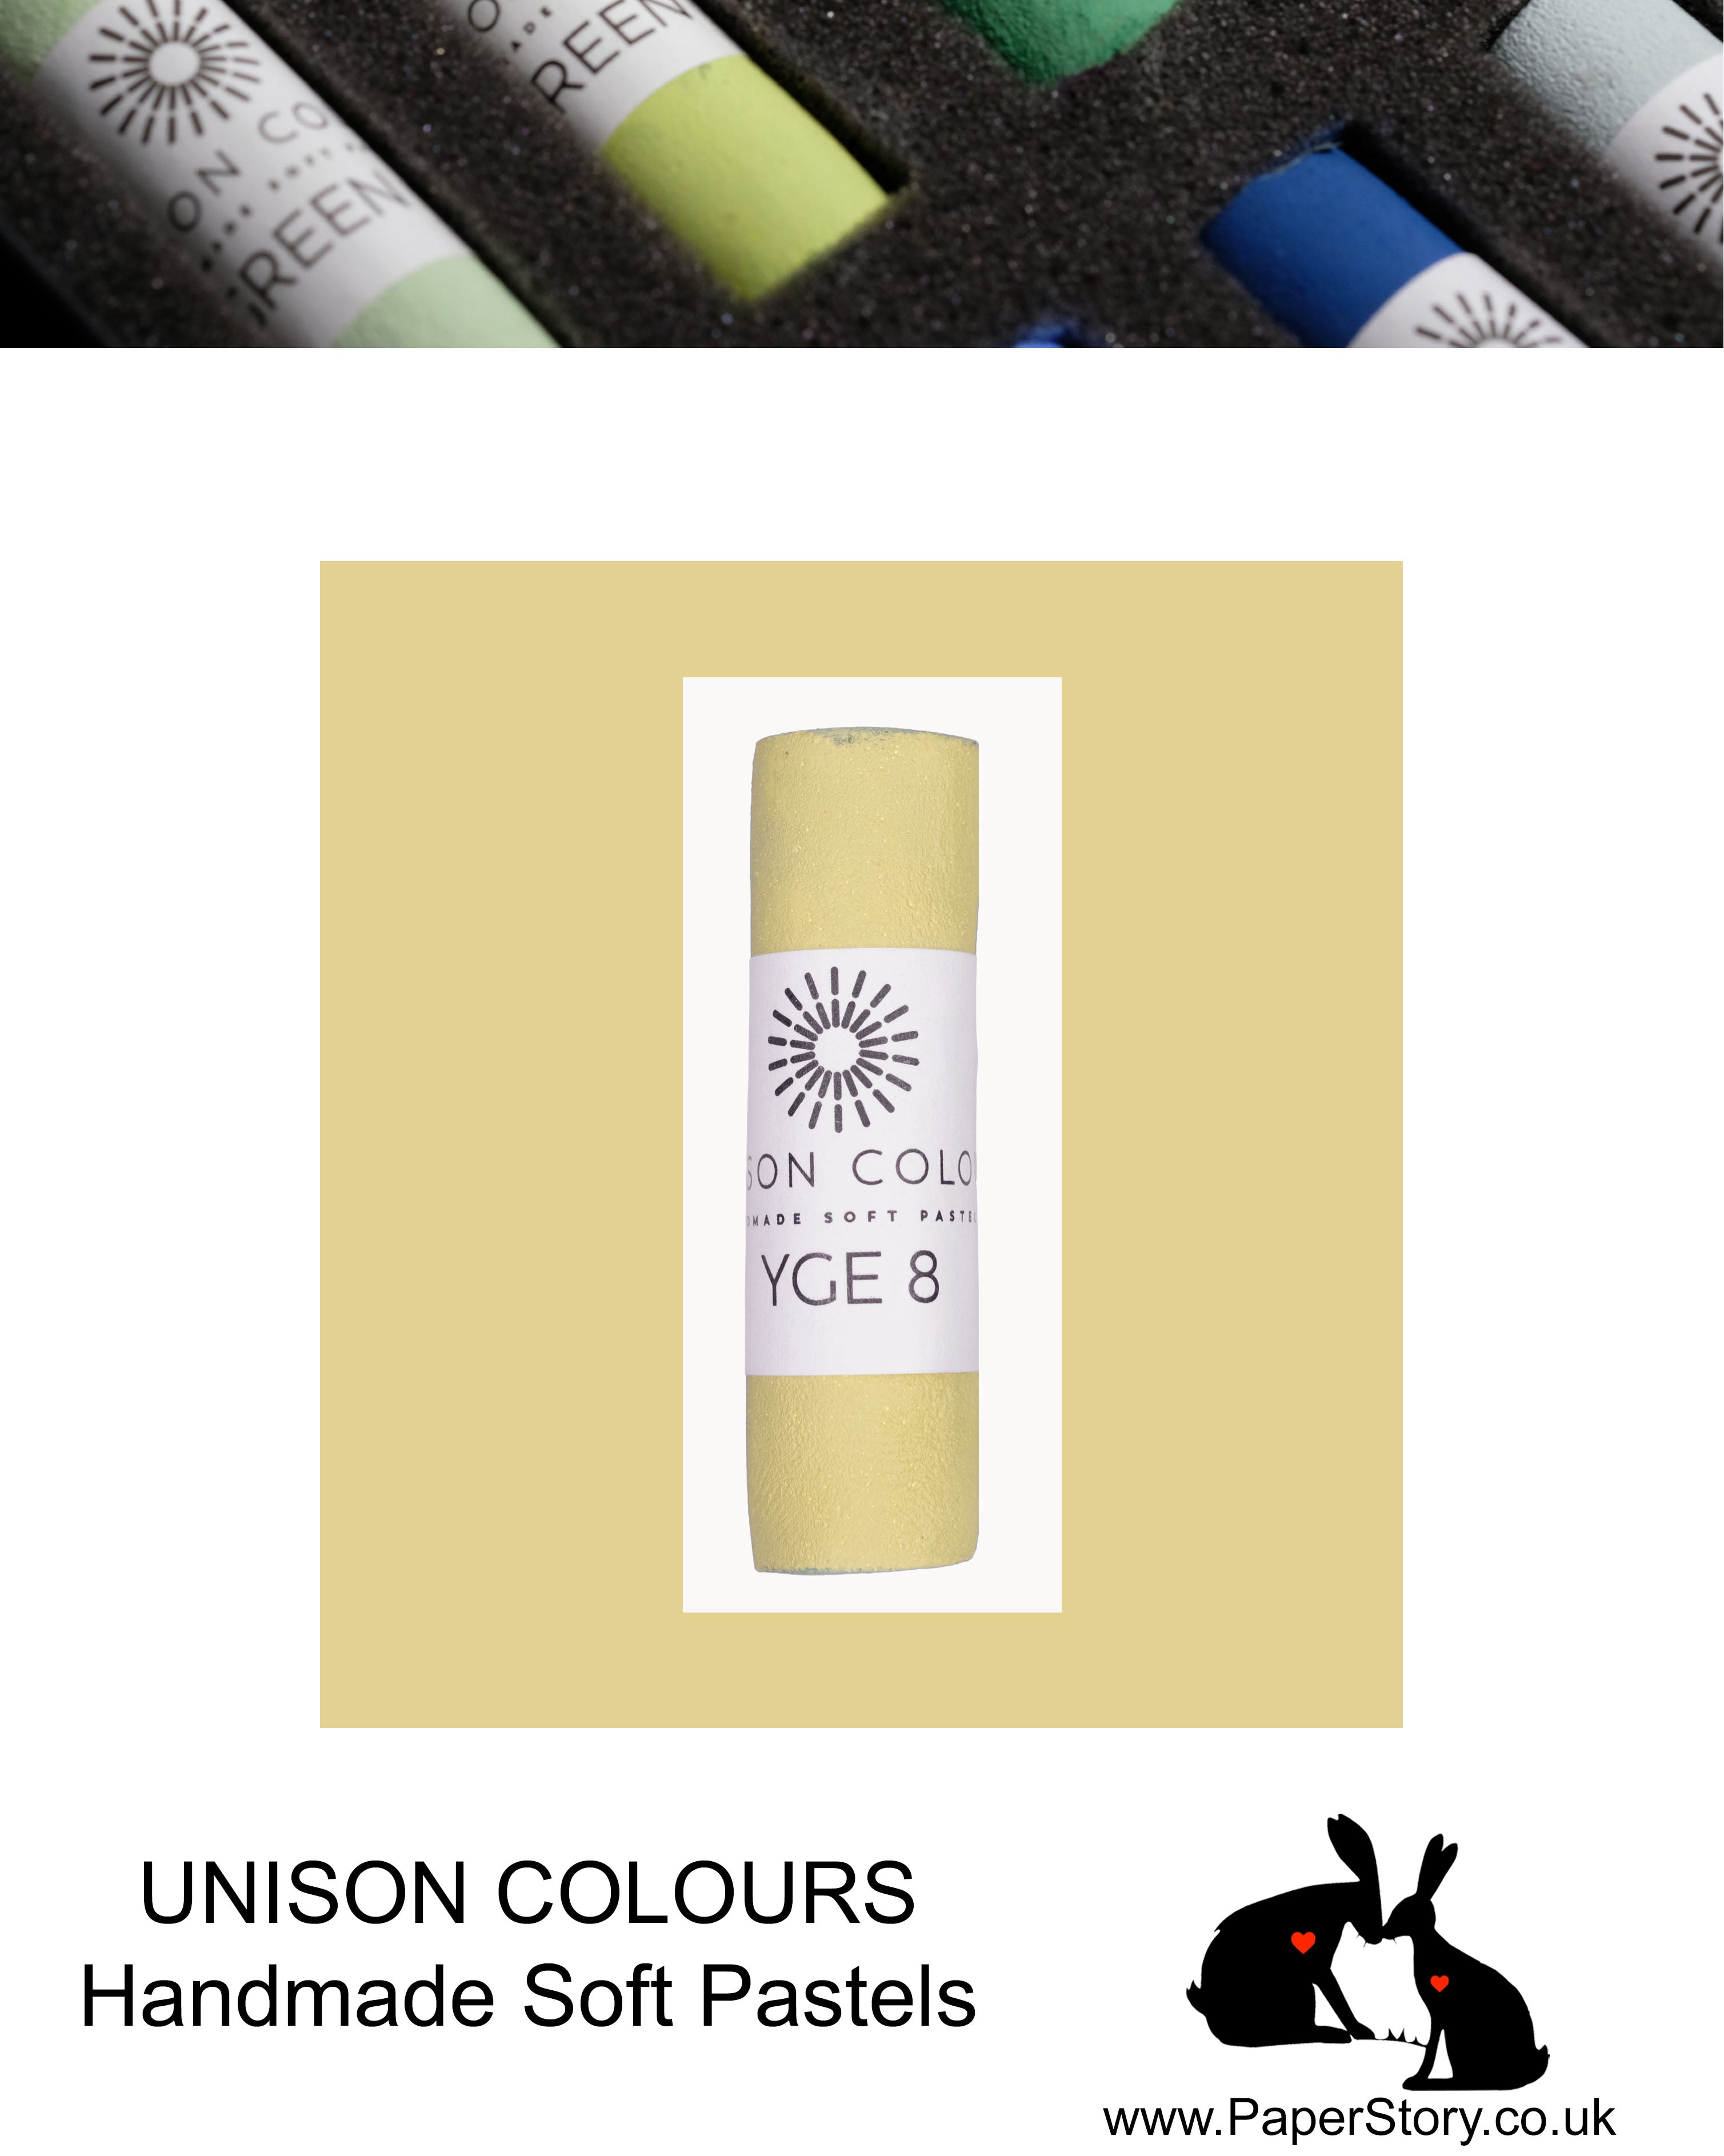 Unison Colour Handmade Soft Pastels Yellow Green Earth 8 - Size Regular